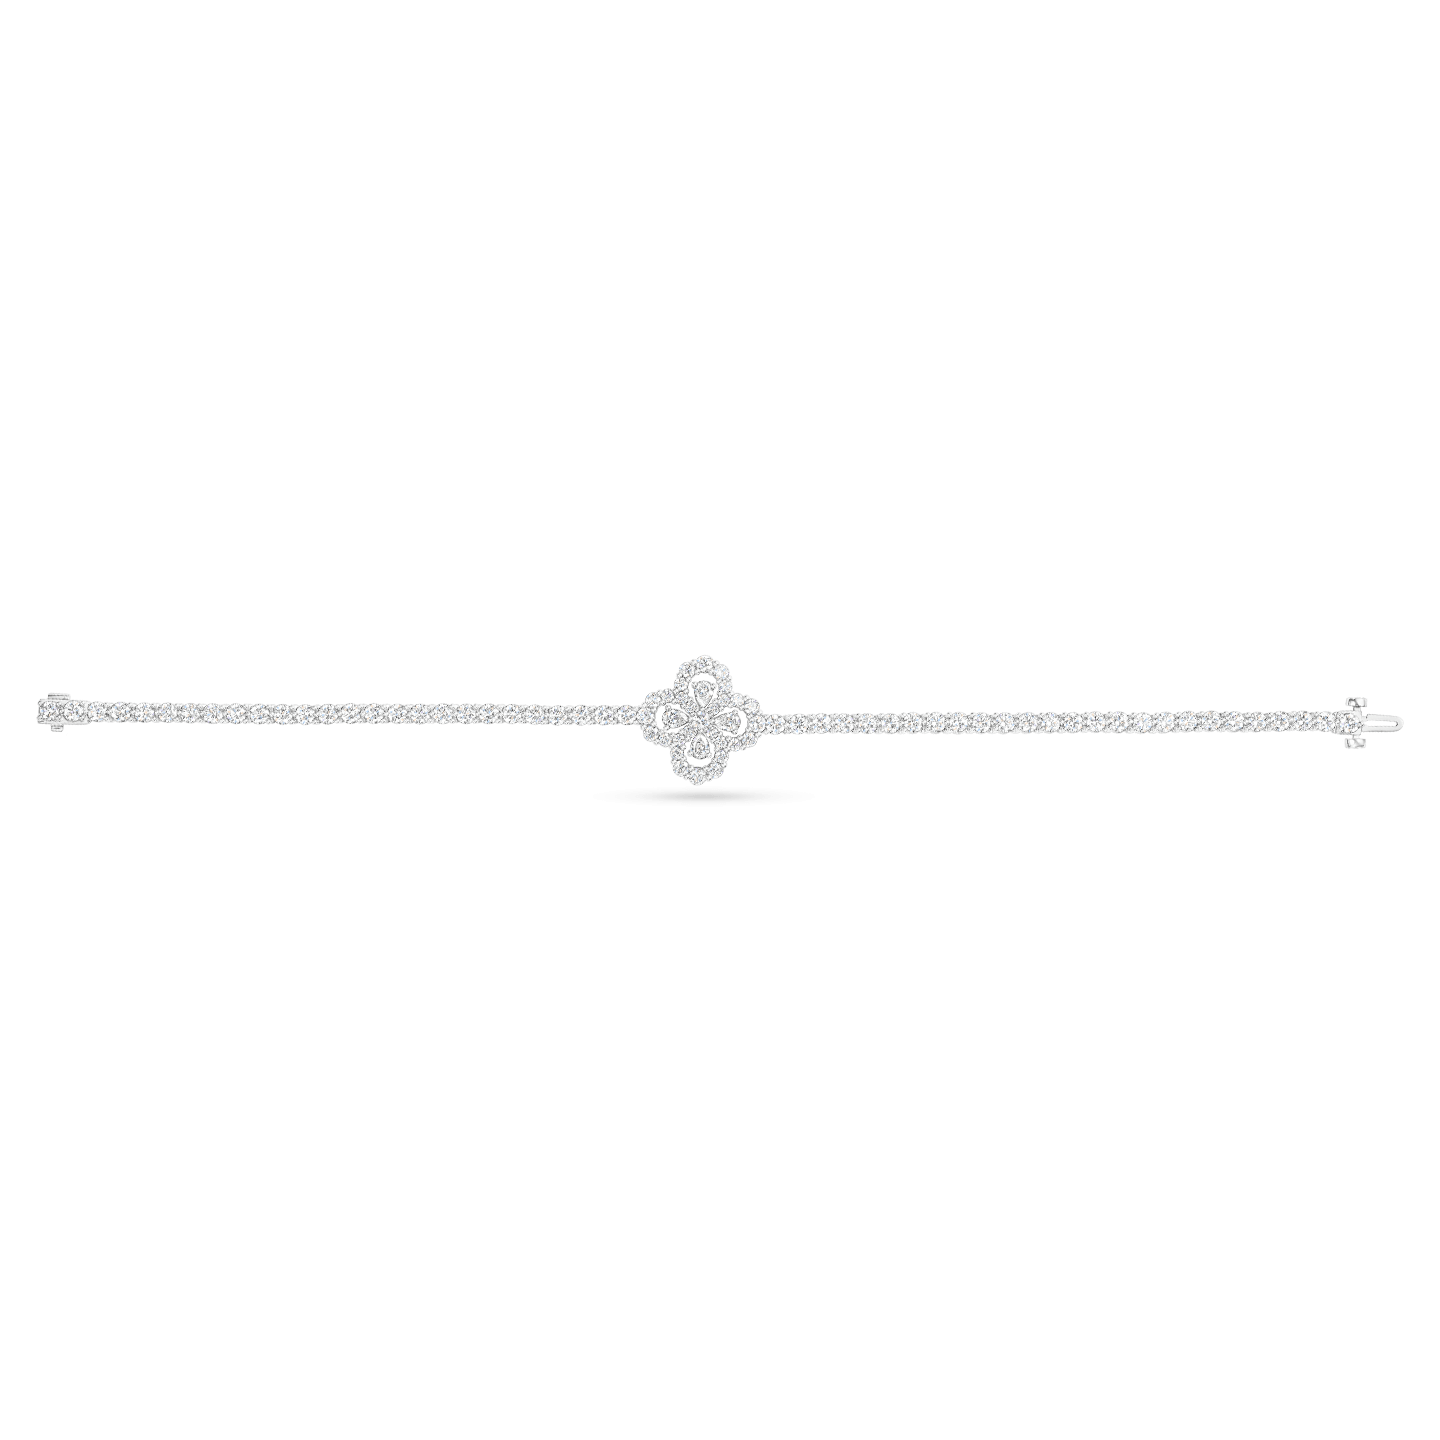 Ruby and Diamond Bracelet by Harry Winston Inc. on artnet